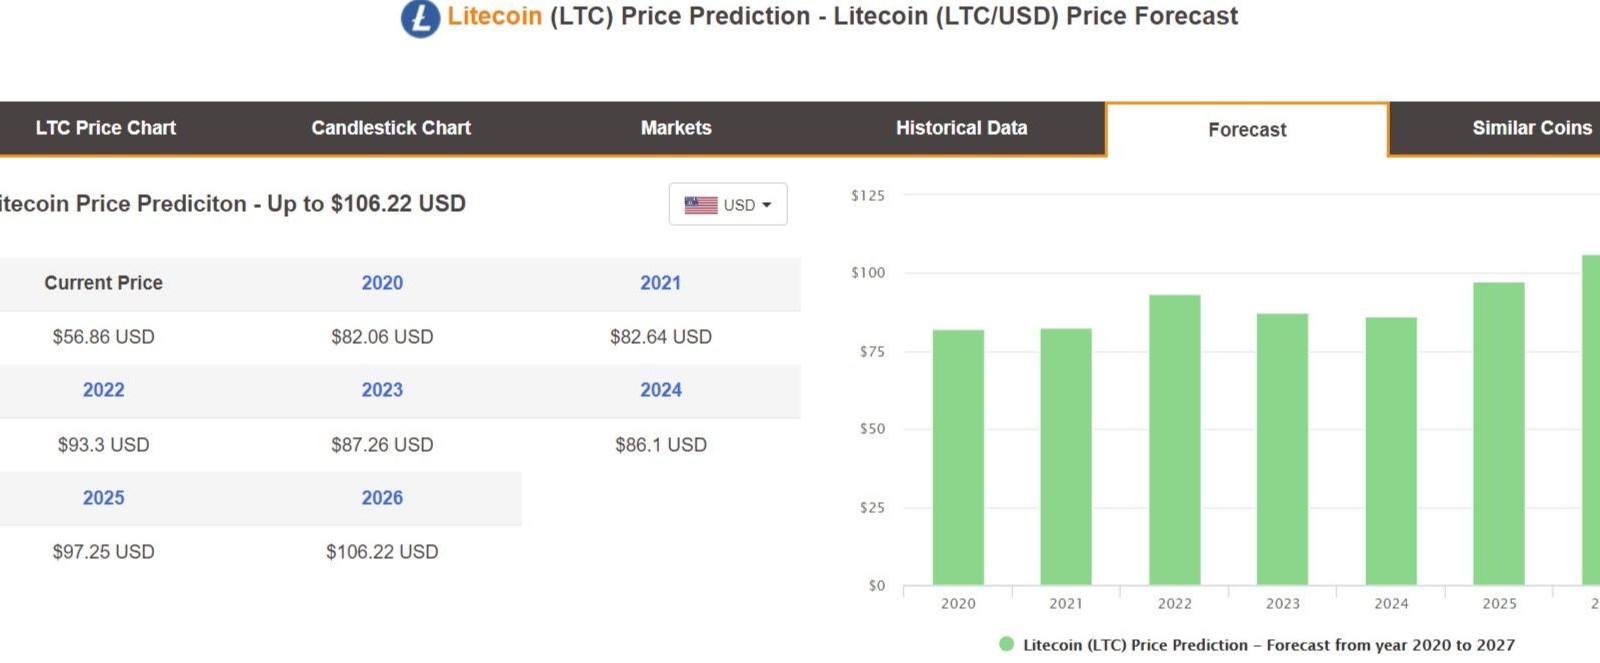 LTC price prediction from DigitalCoinPrice